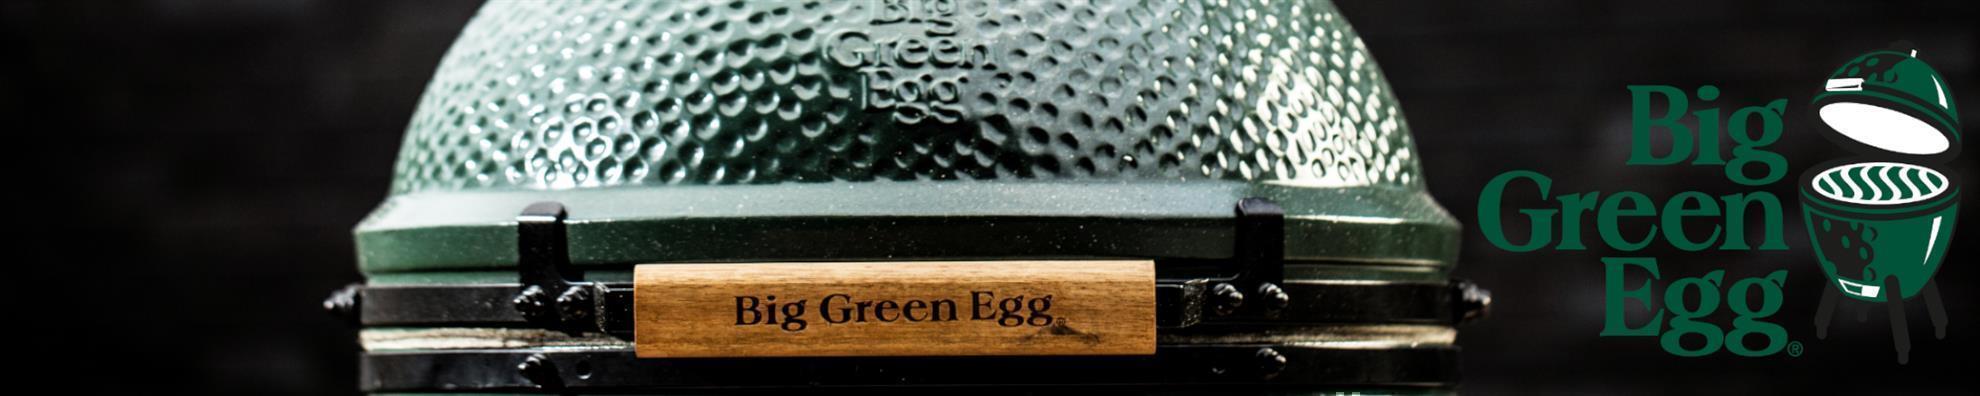 Big Green Egg - halbrunder convEGGtor Stone L